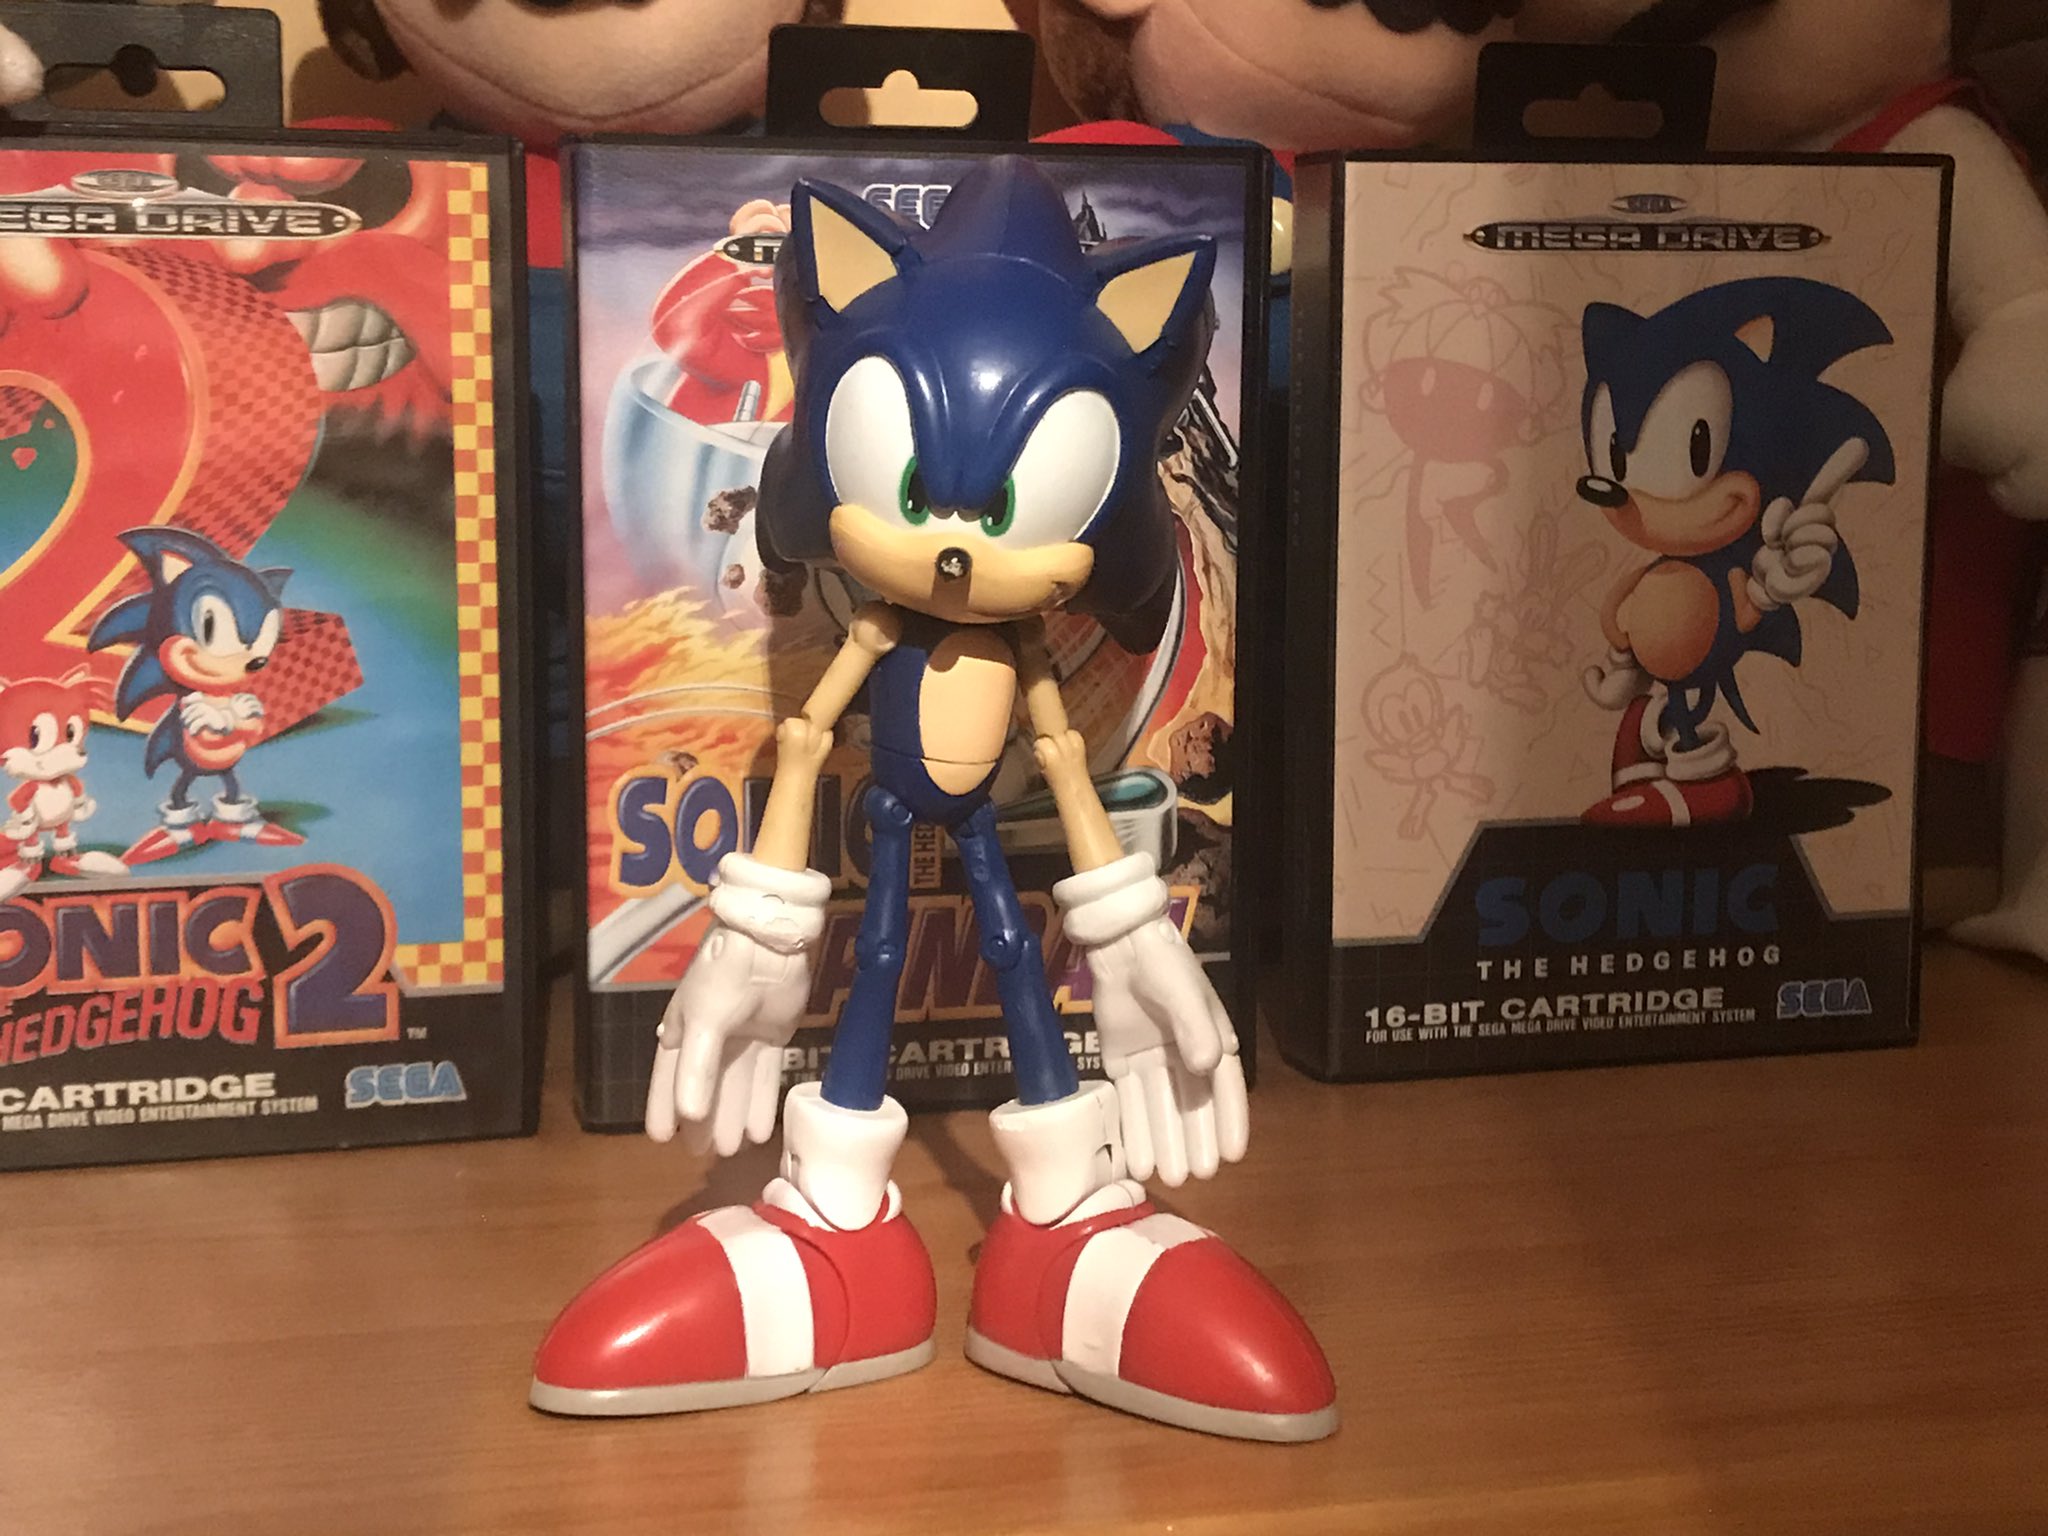 Super Poser Sonic - Jazwares